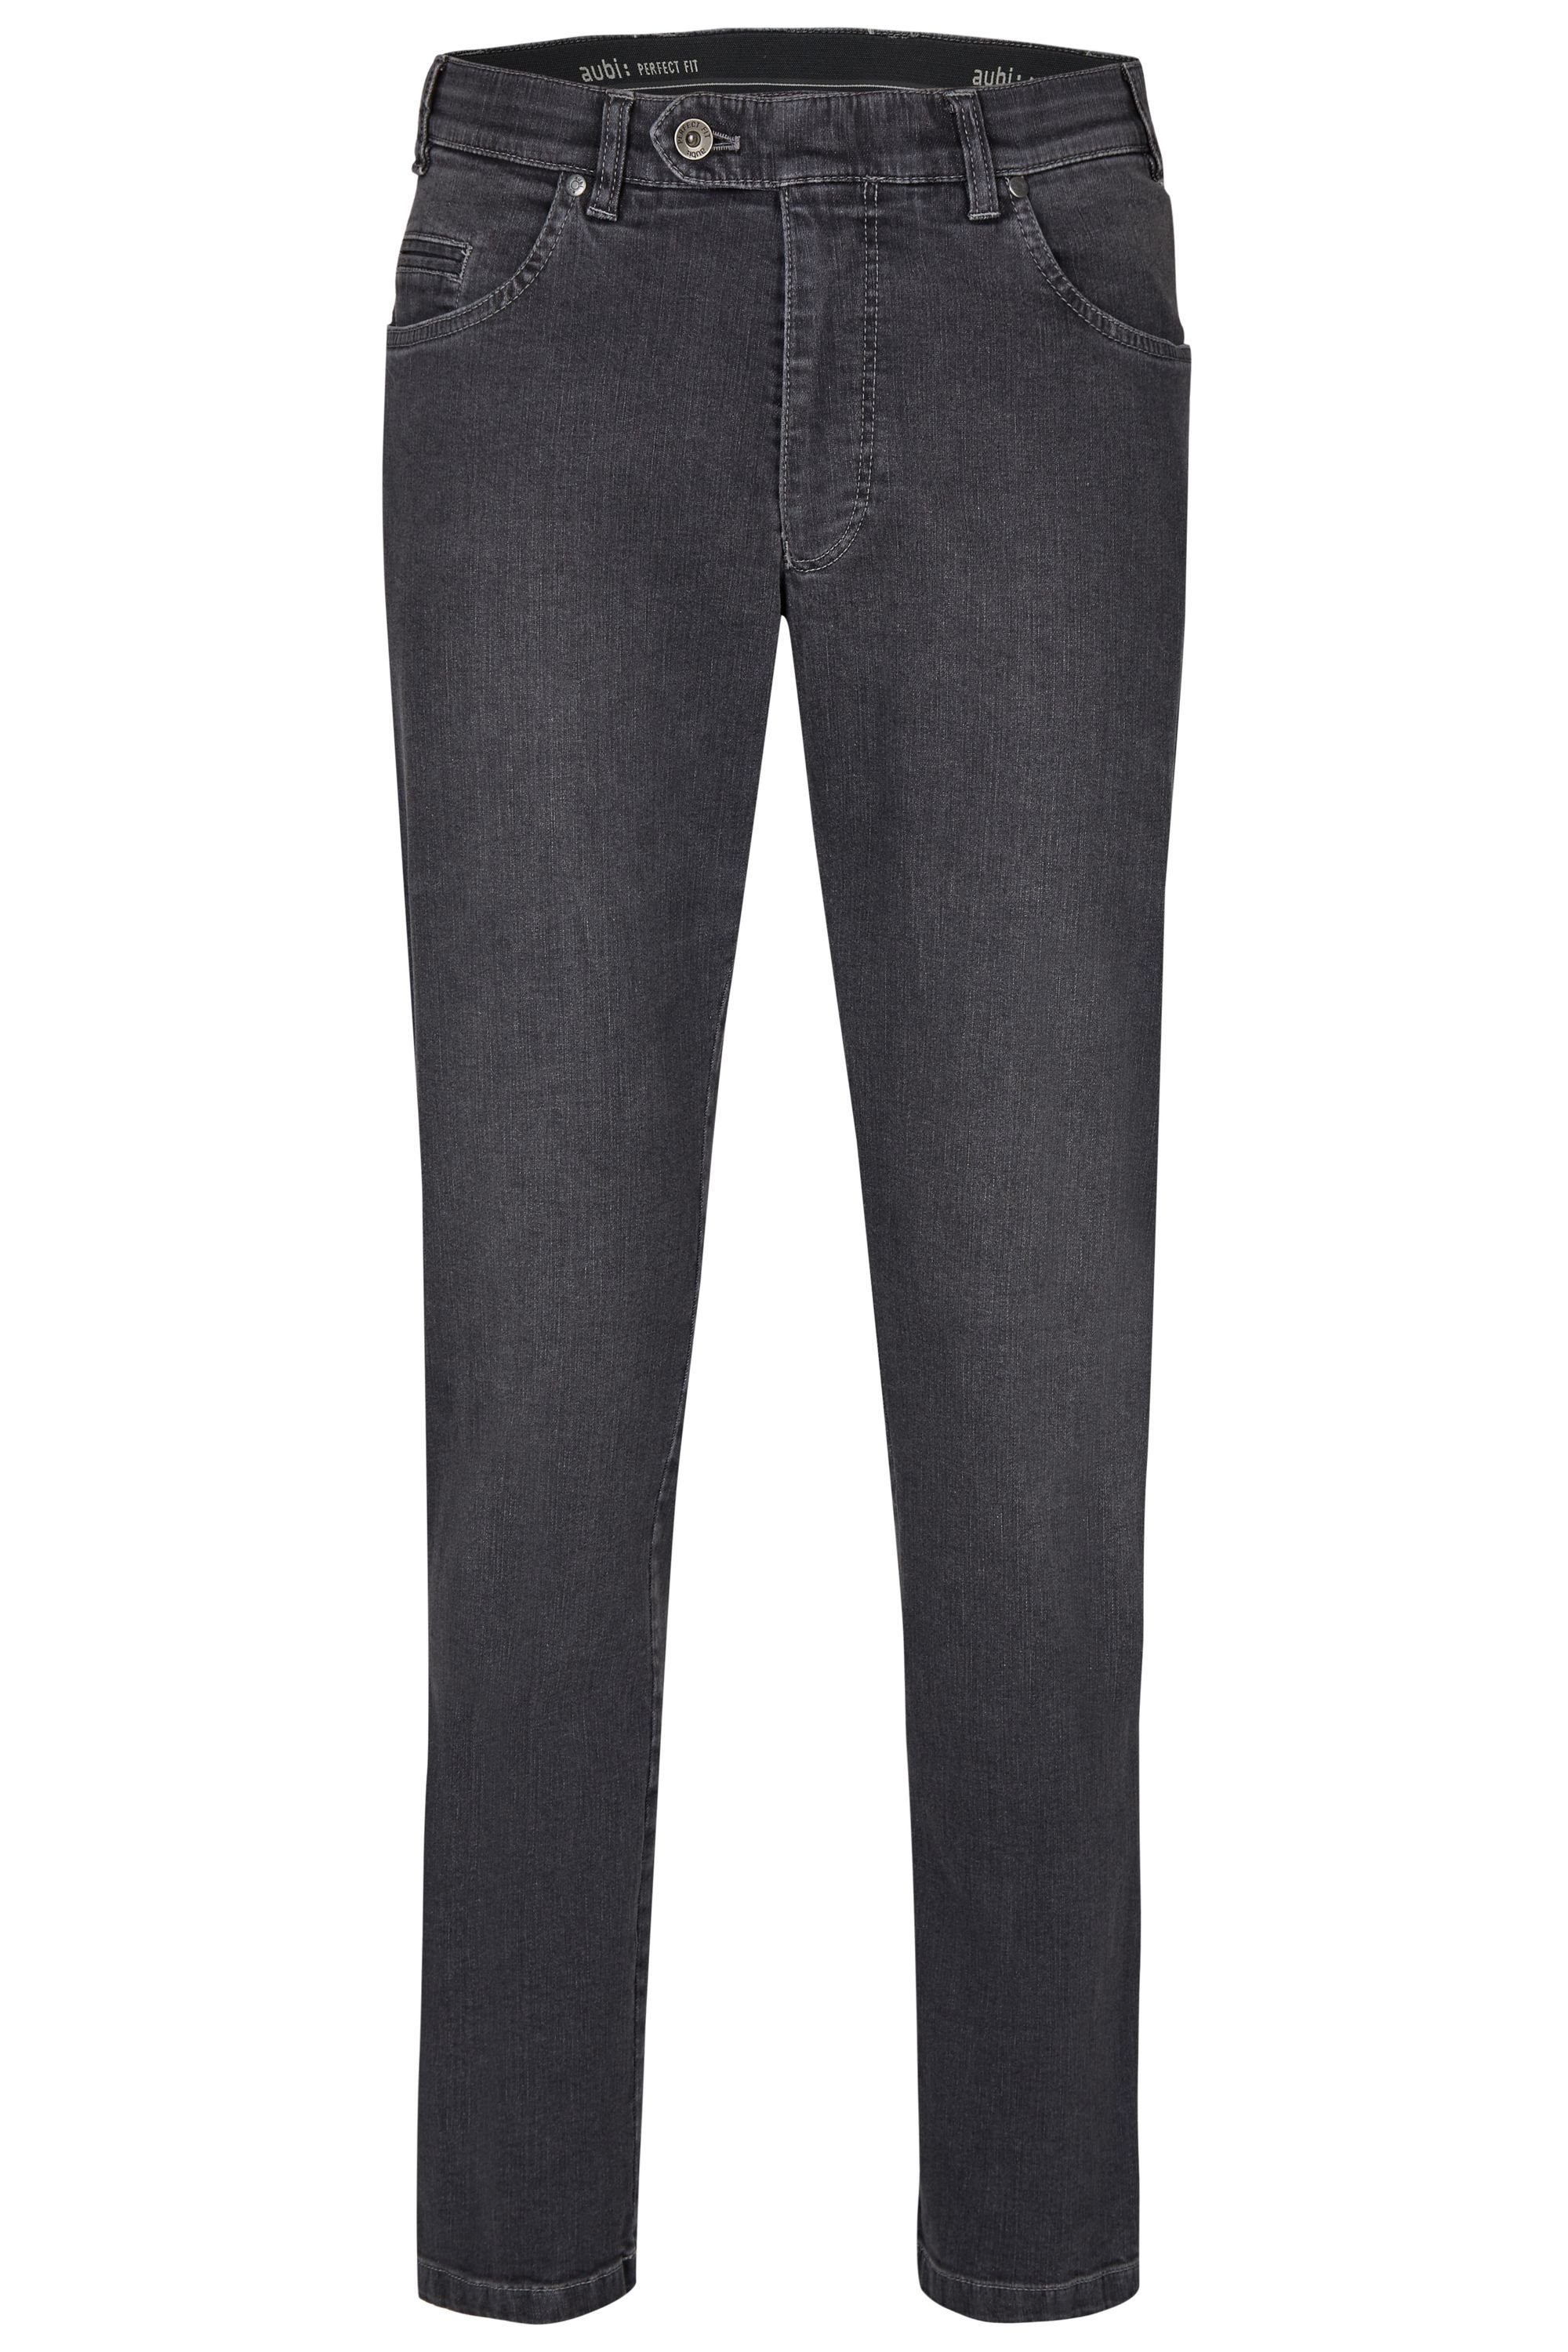 aubi: Bequeme Jeans aubi Perfect Fit Herren Jeans Hose Stretch aus Baumwolle High Flex Modell 577 grey soft used (53)